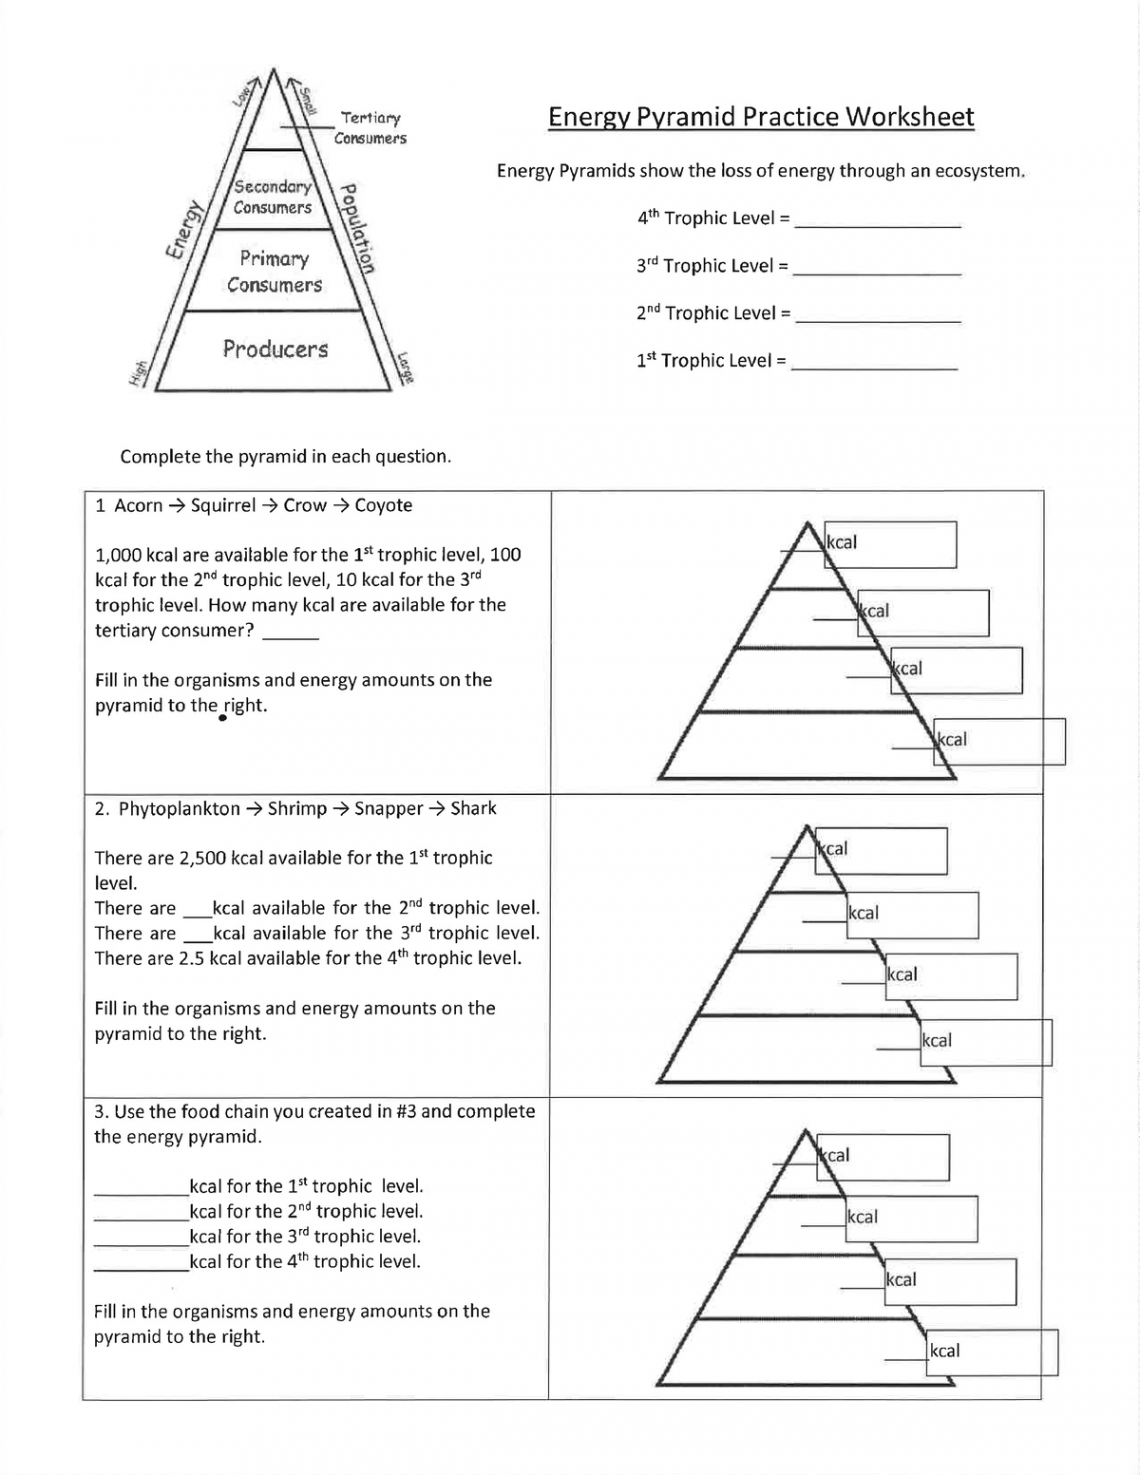 Chelsea Denaud - energy pyramid practice worksheet - scw - Studocu